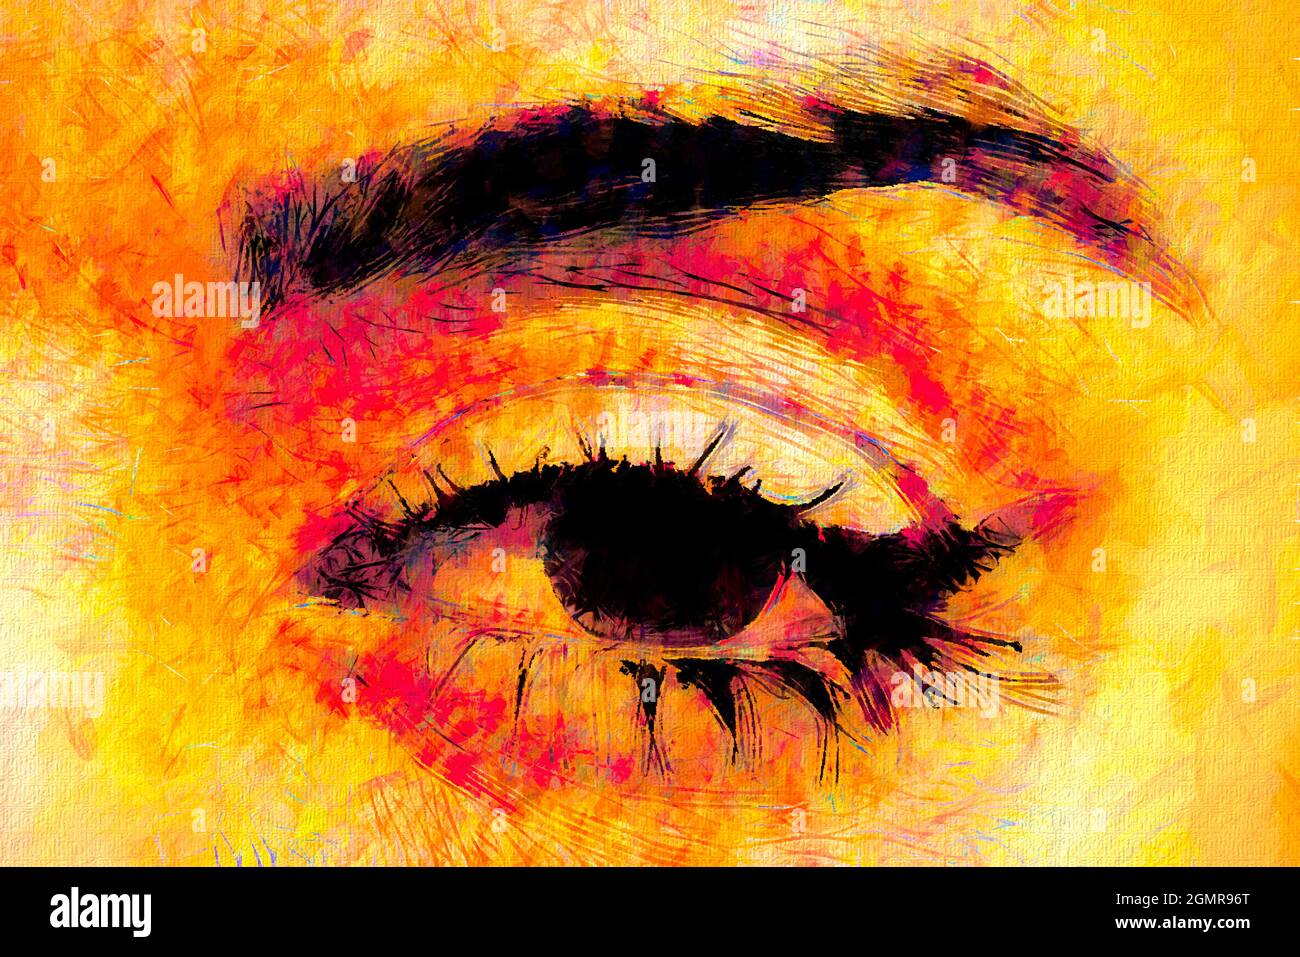 Ölgemälde in bunten Farben. Abstraktes Bild des Auges. Stockfoto